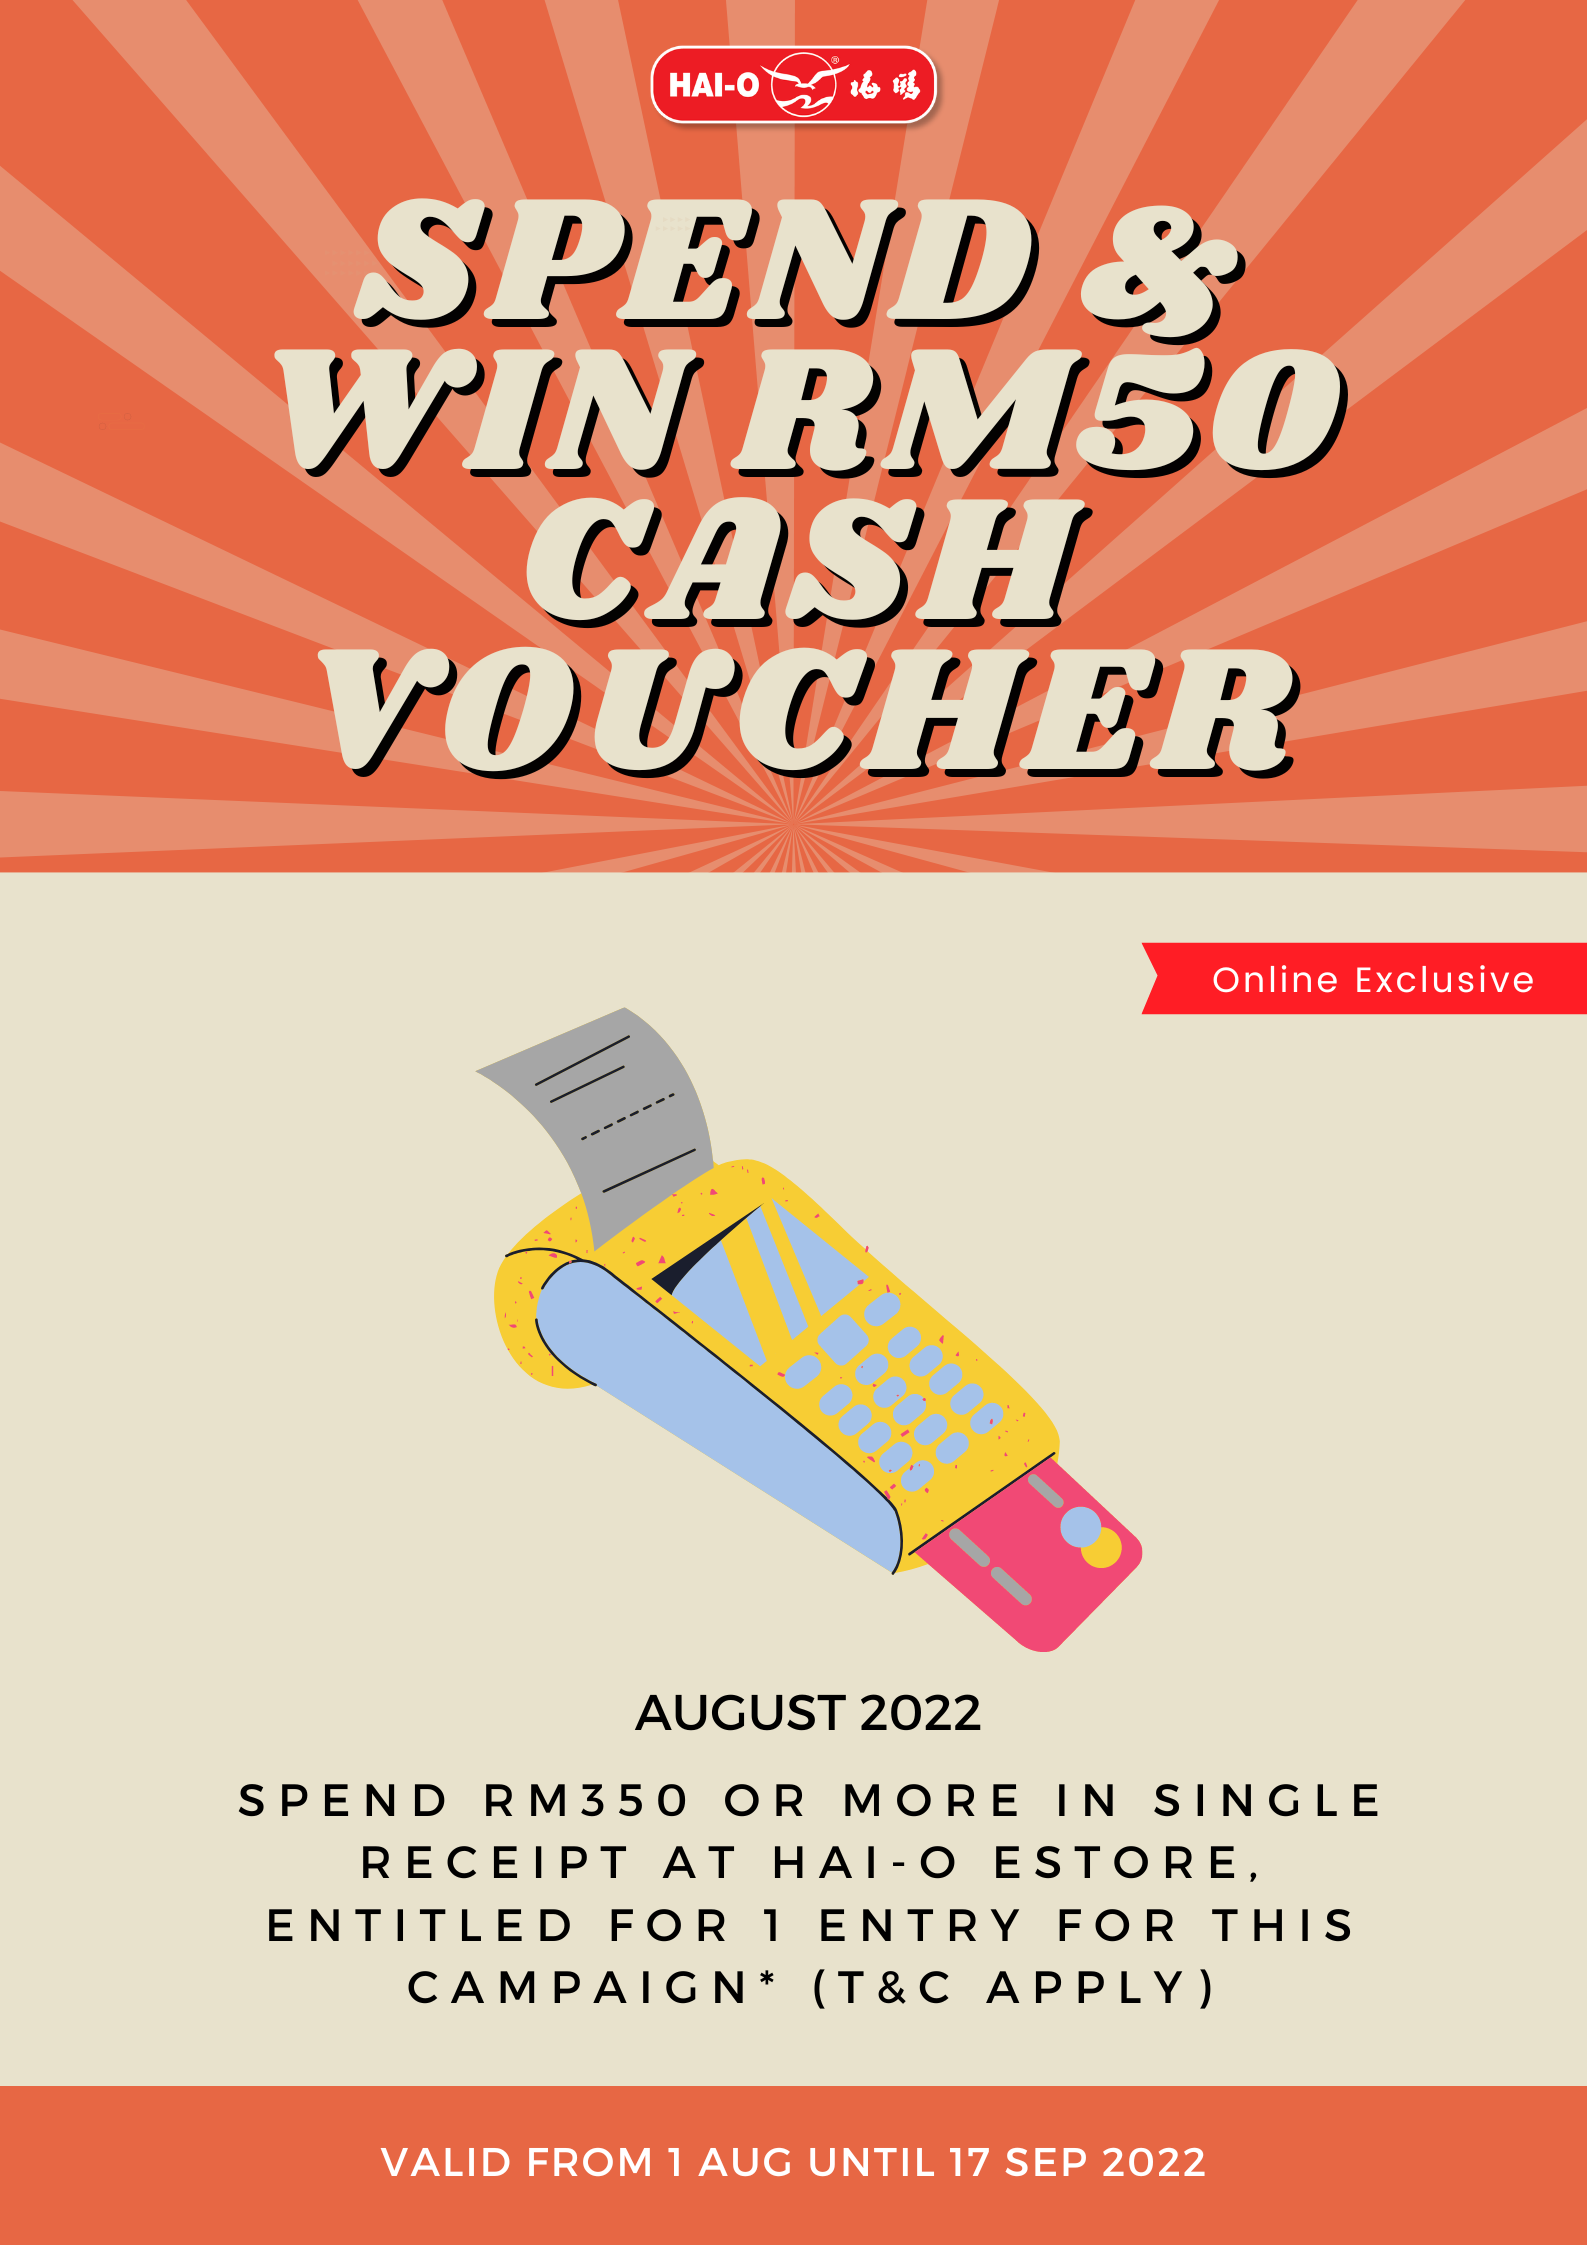 Spend & Win RM50 Cash Voucher *ONLINE EXCLUSIVE